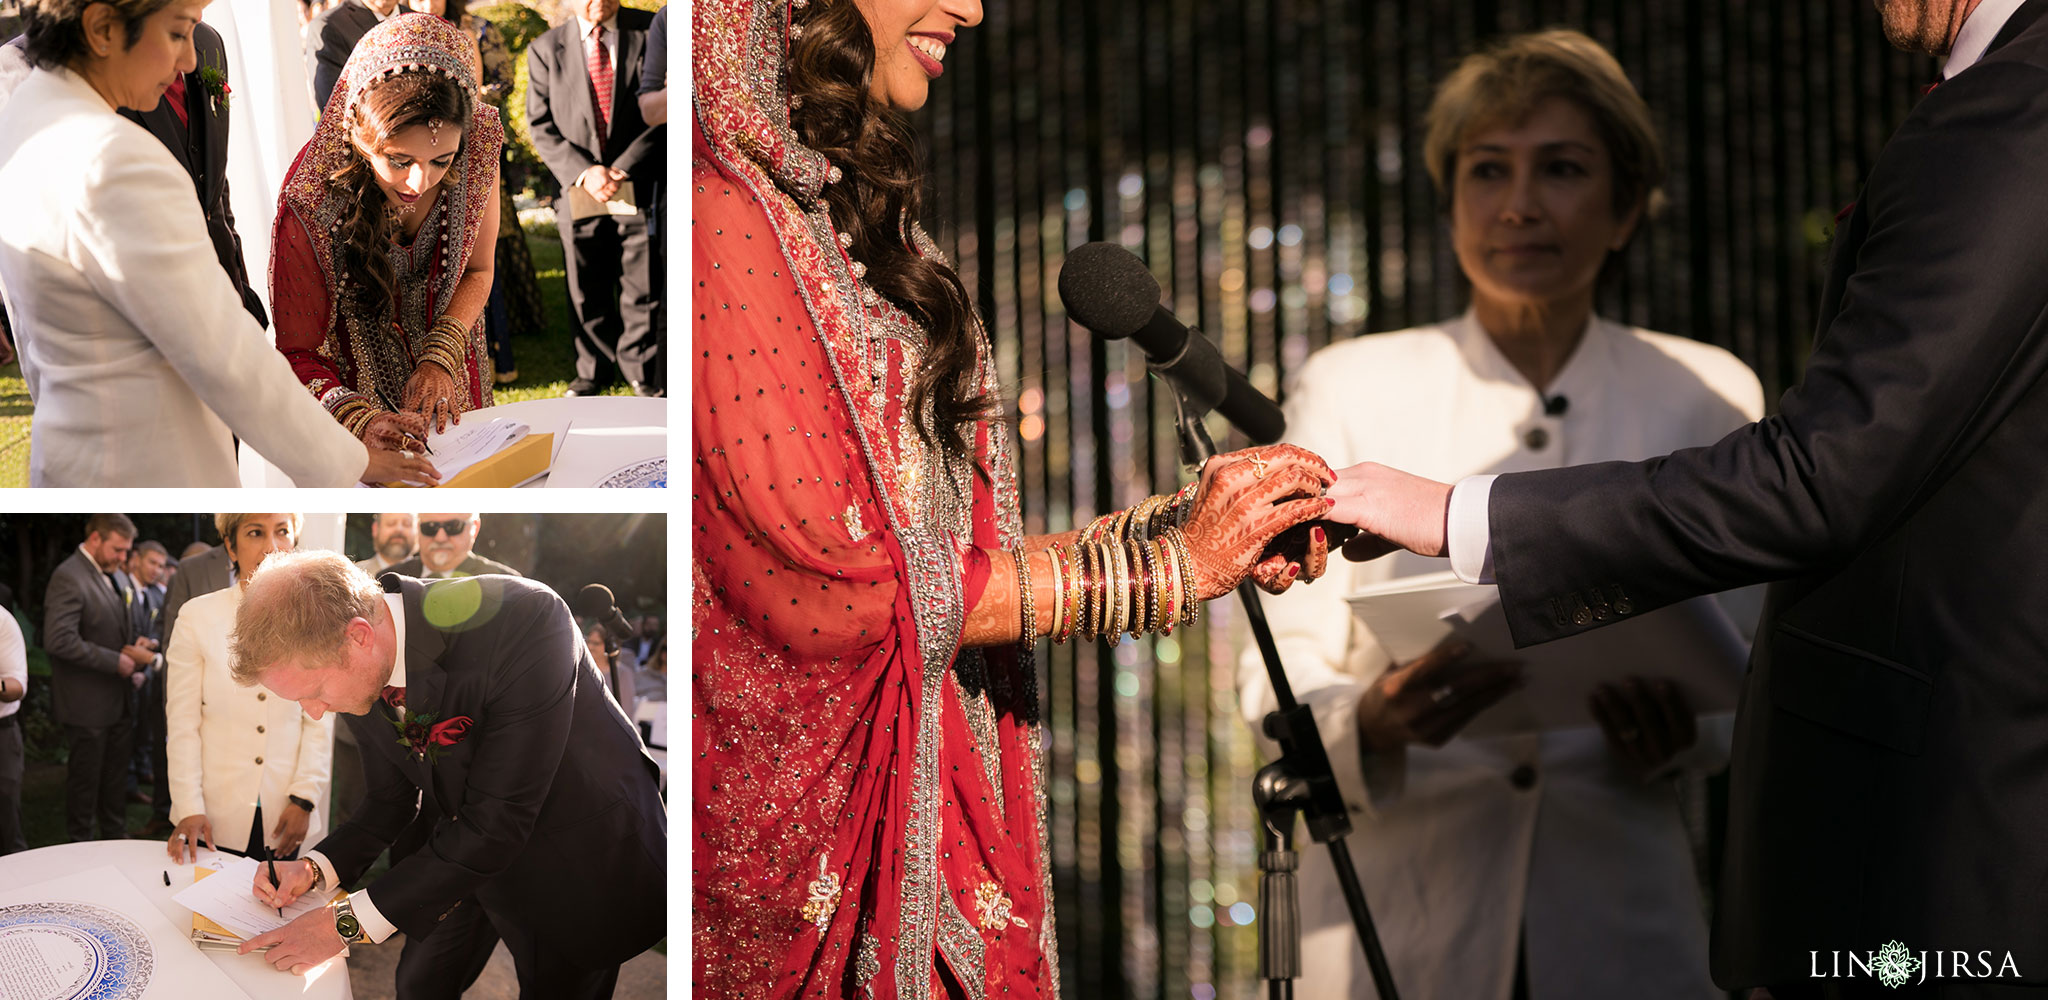 27 altadena town country club pakistani nikah wedding ceremony photography